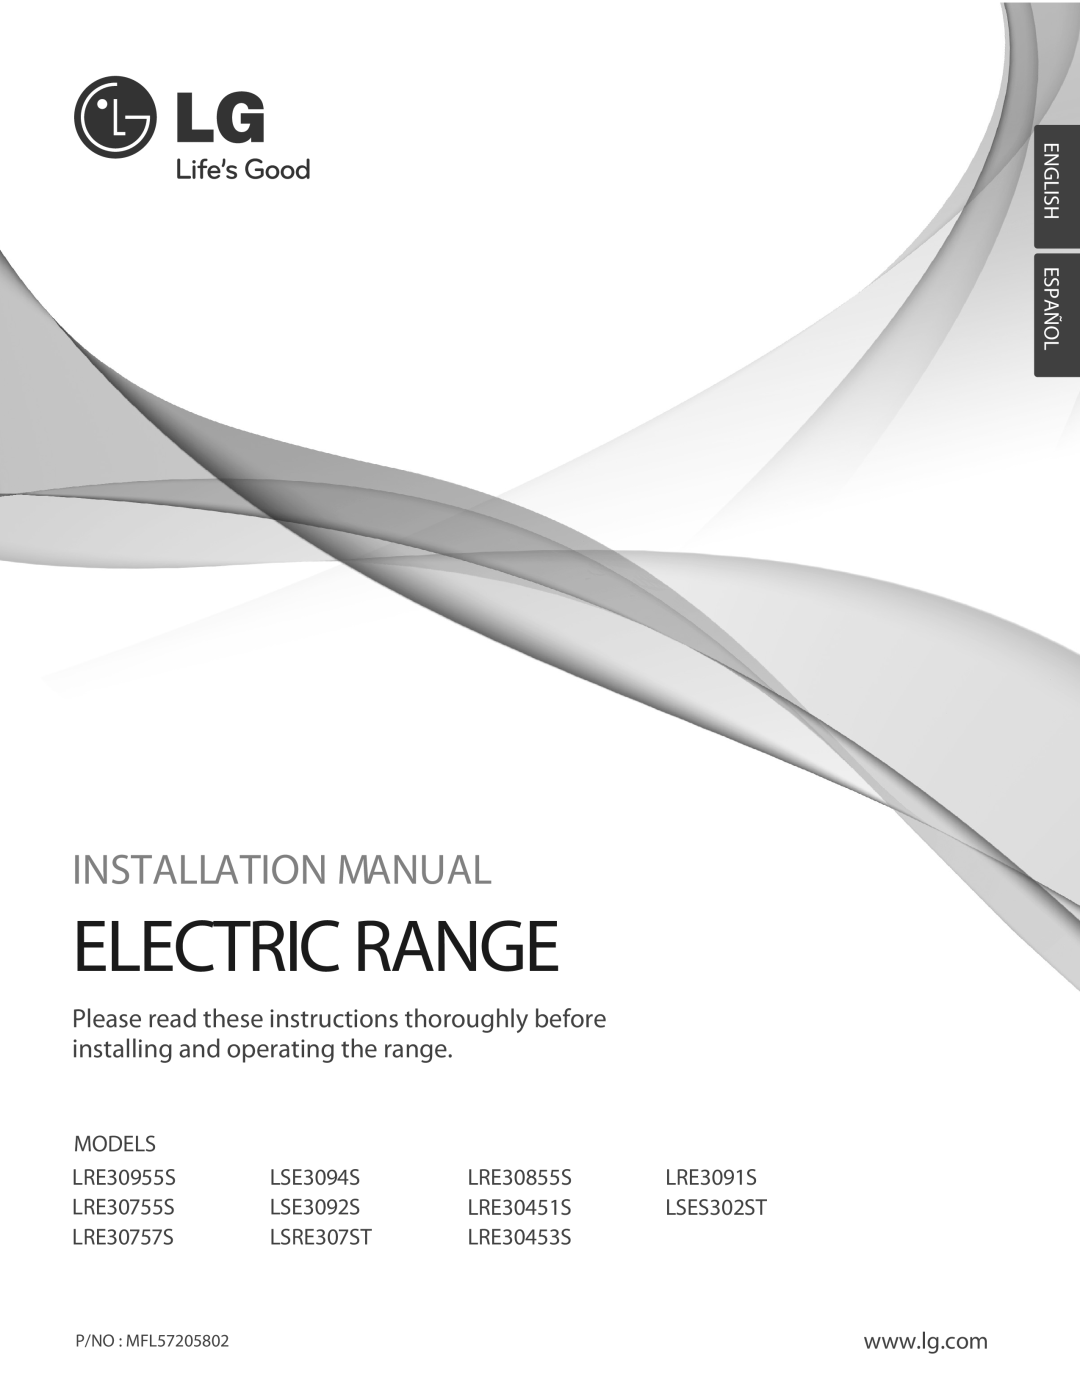 LG Electronics LST5601S, LRE3091S installation manual Installation Manual, Electric Range, Websitehttp//ca.lge.com 